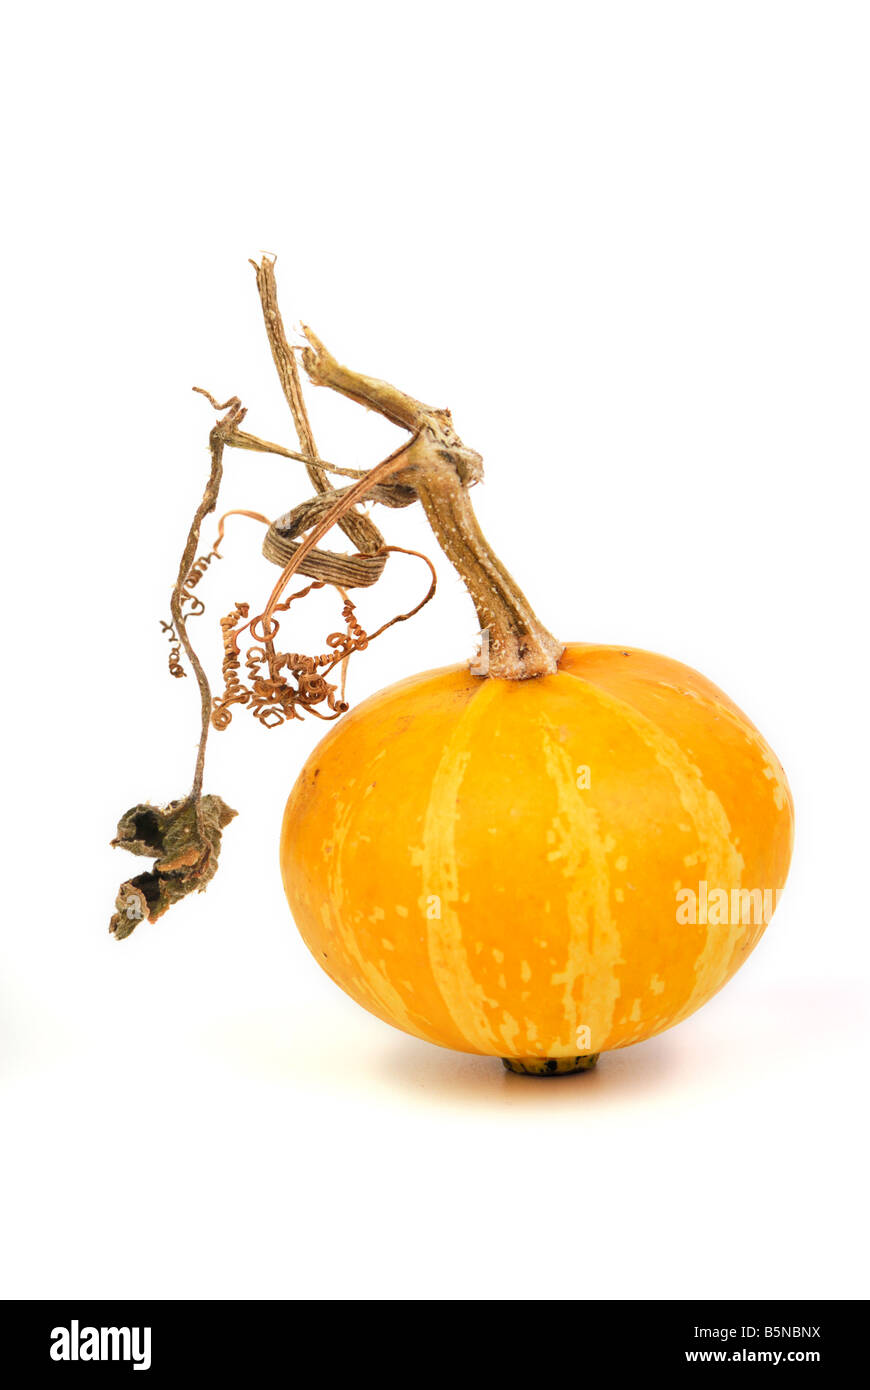 Yellow decorative pumpkin on a white background Stock Photo